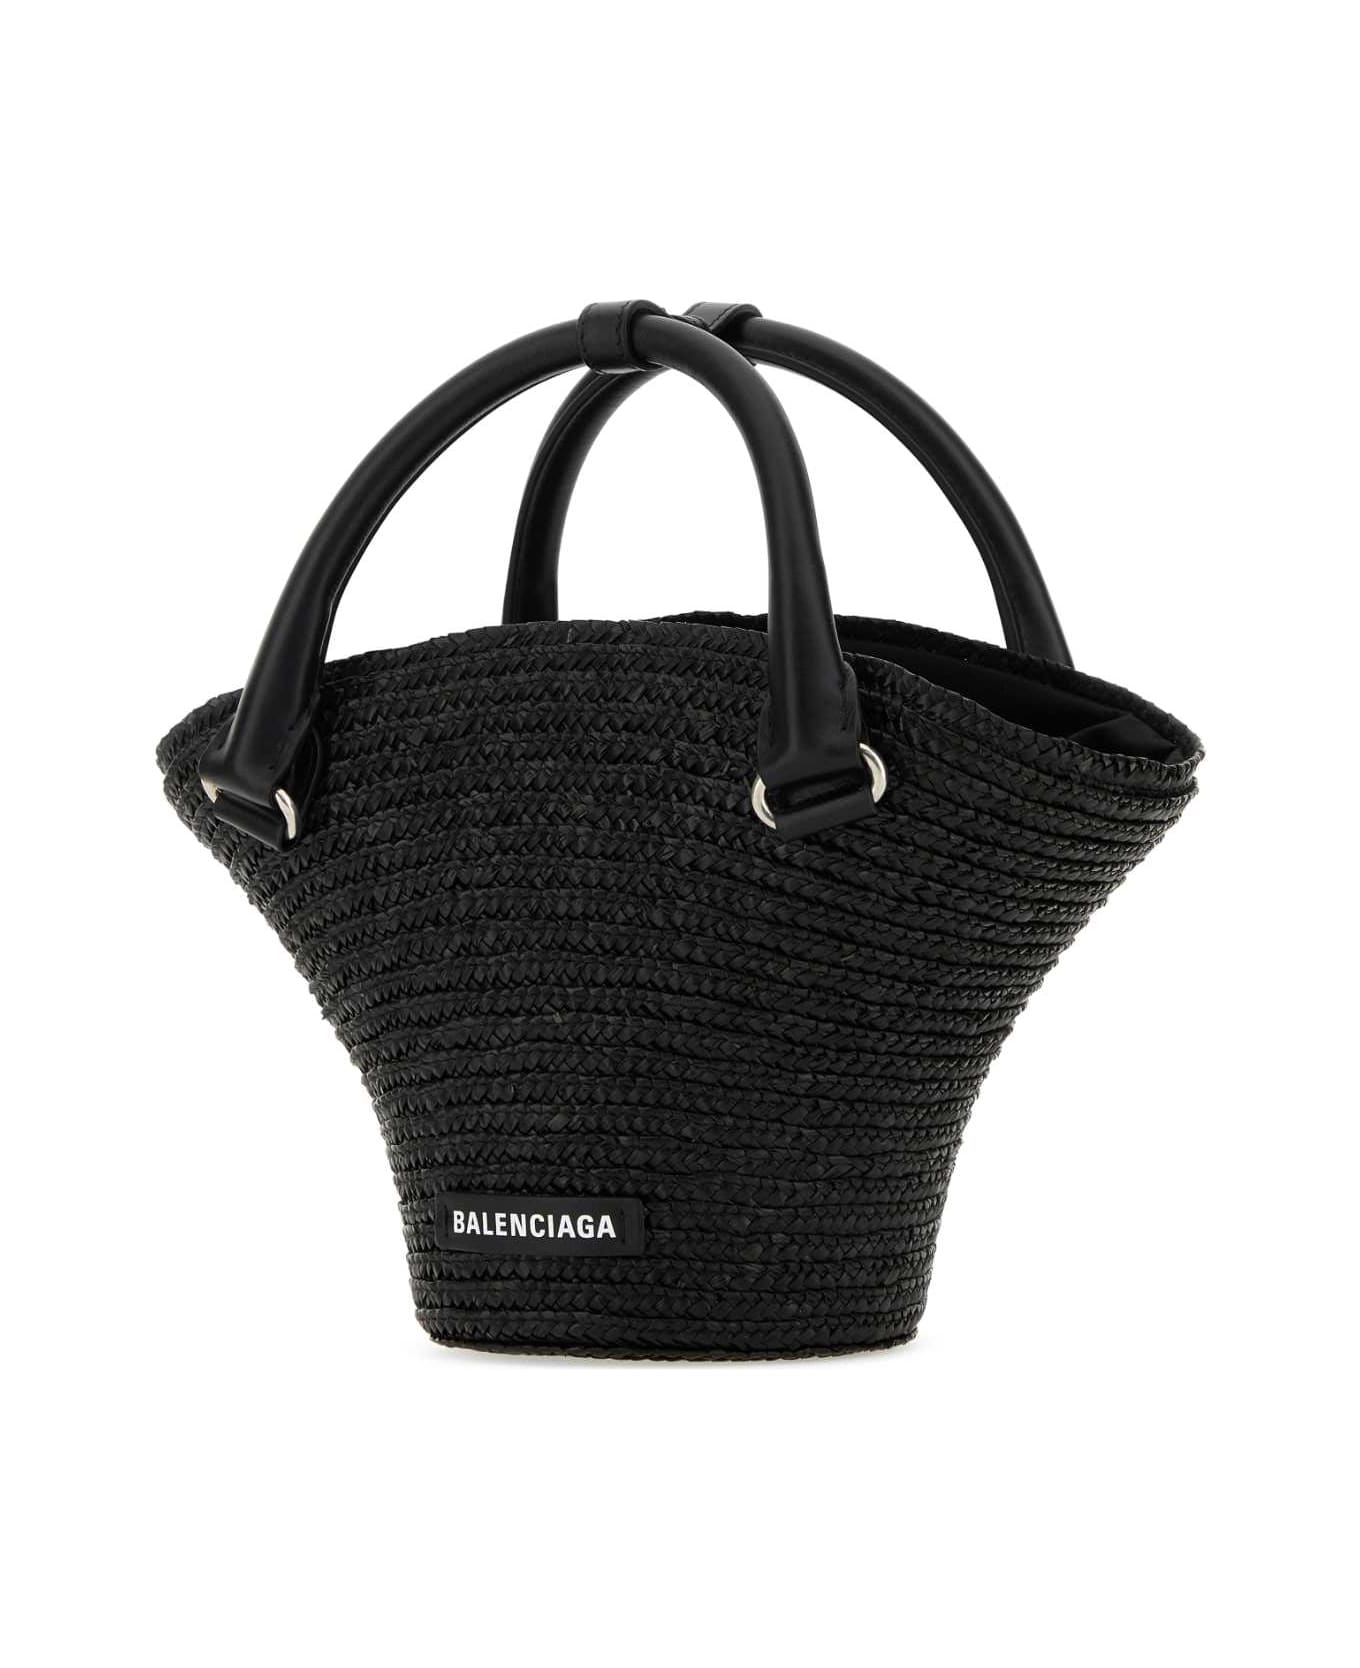 Balenciaga Black Straw Mini Beach Handbag - 1060